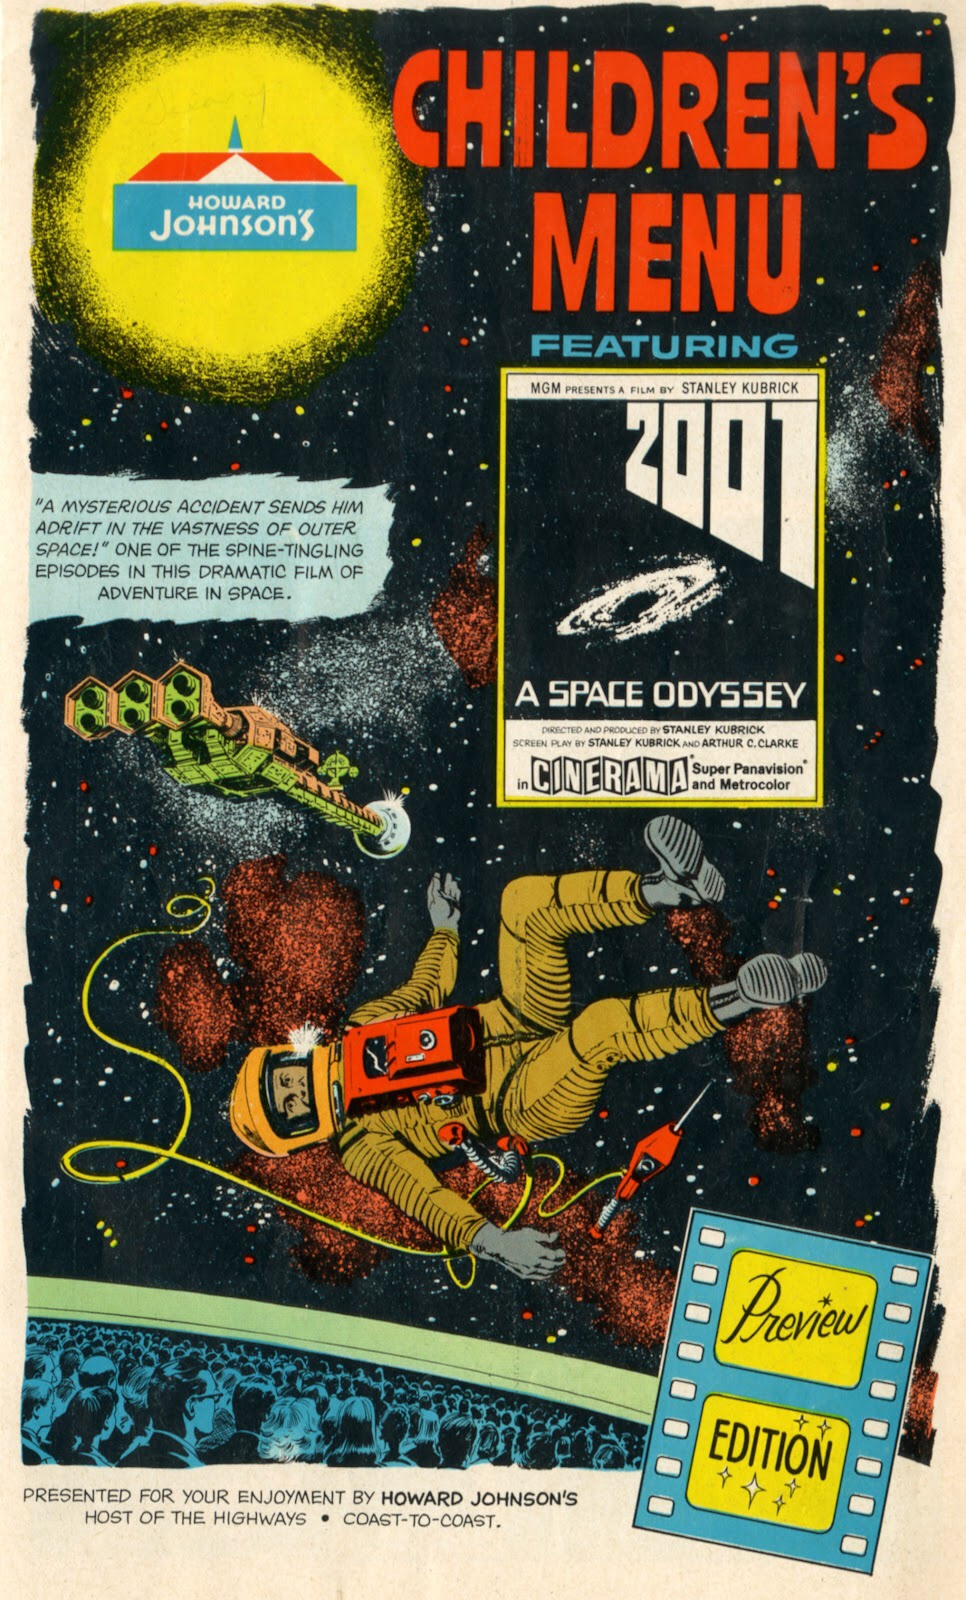 Howard Johnson’s 2001: A Space Odyssey-inspired children’s menu